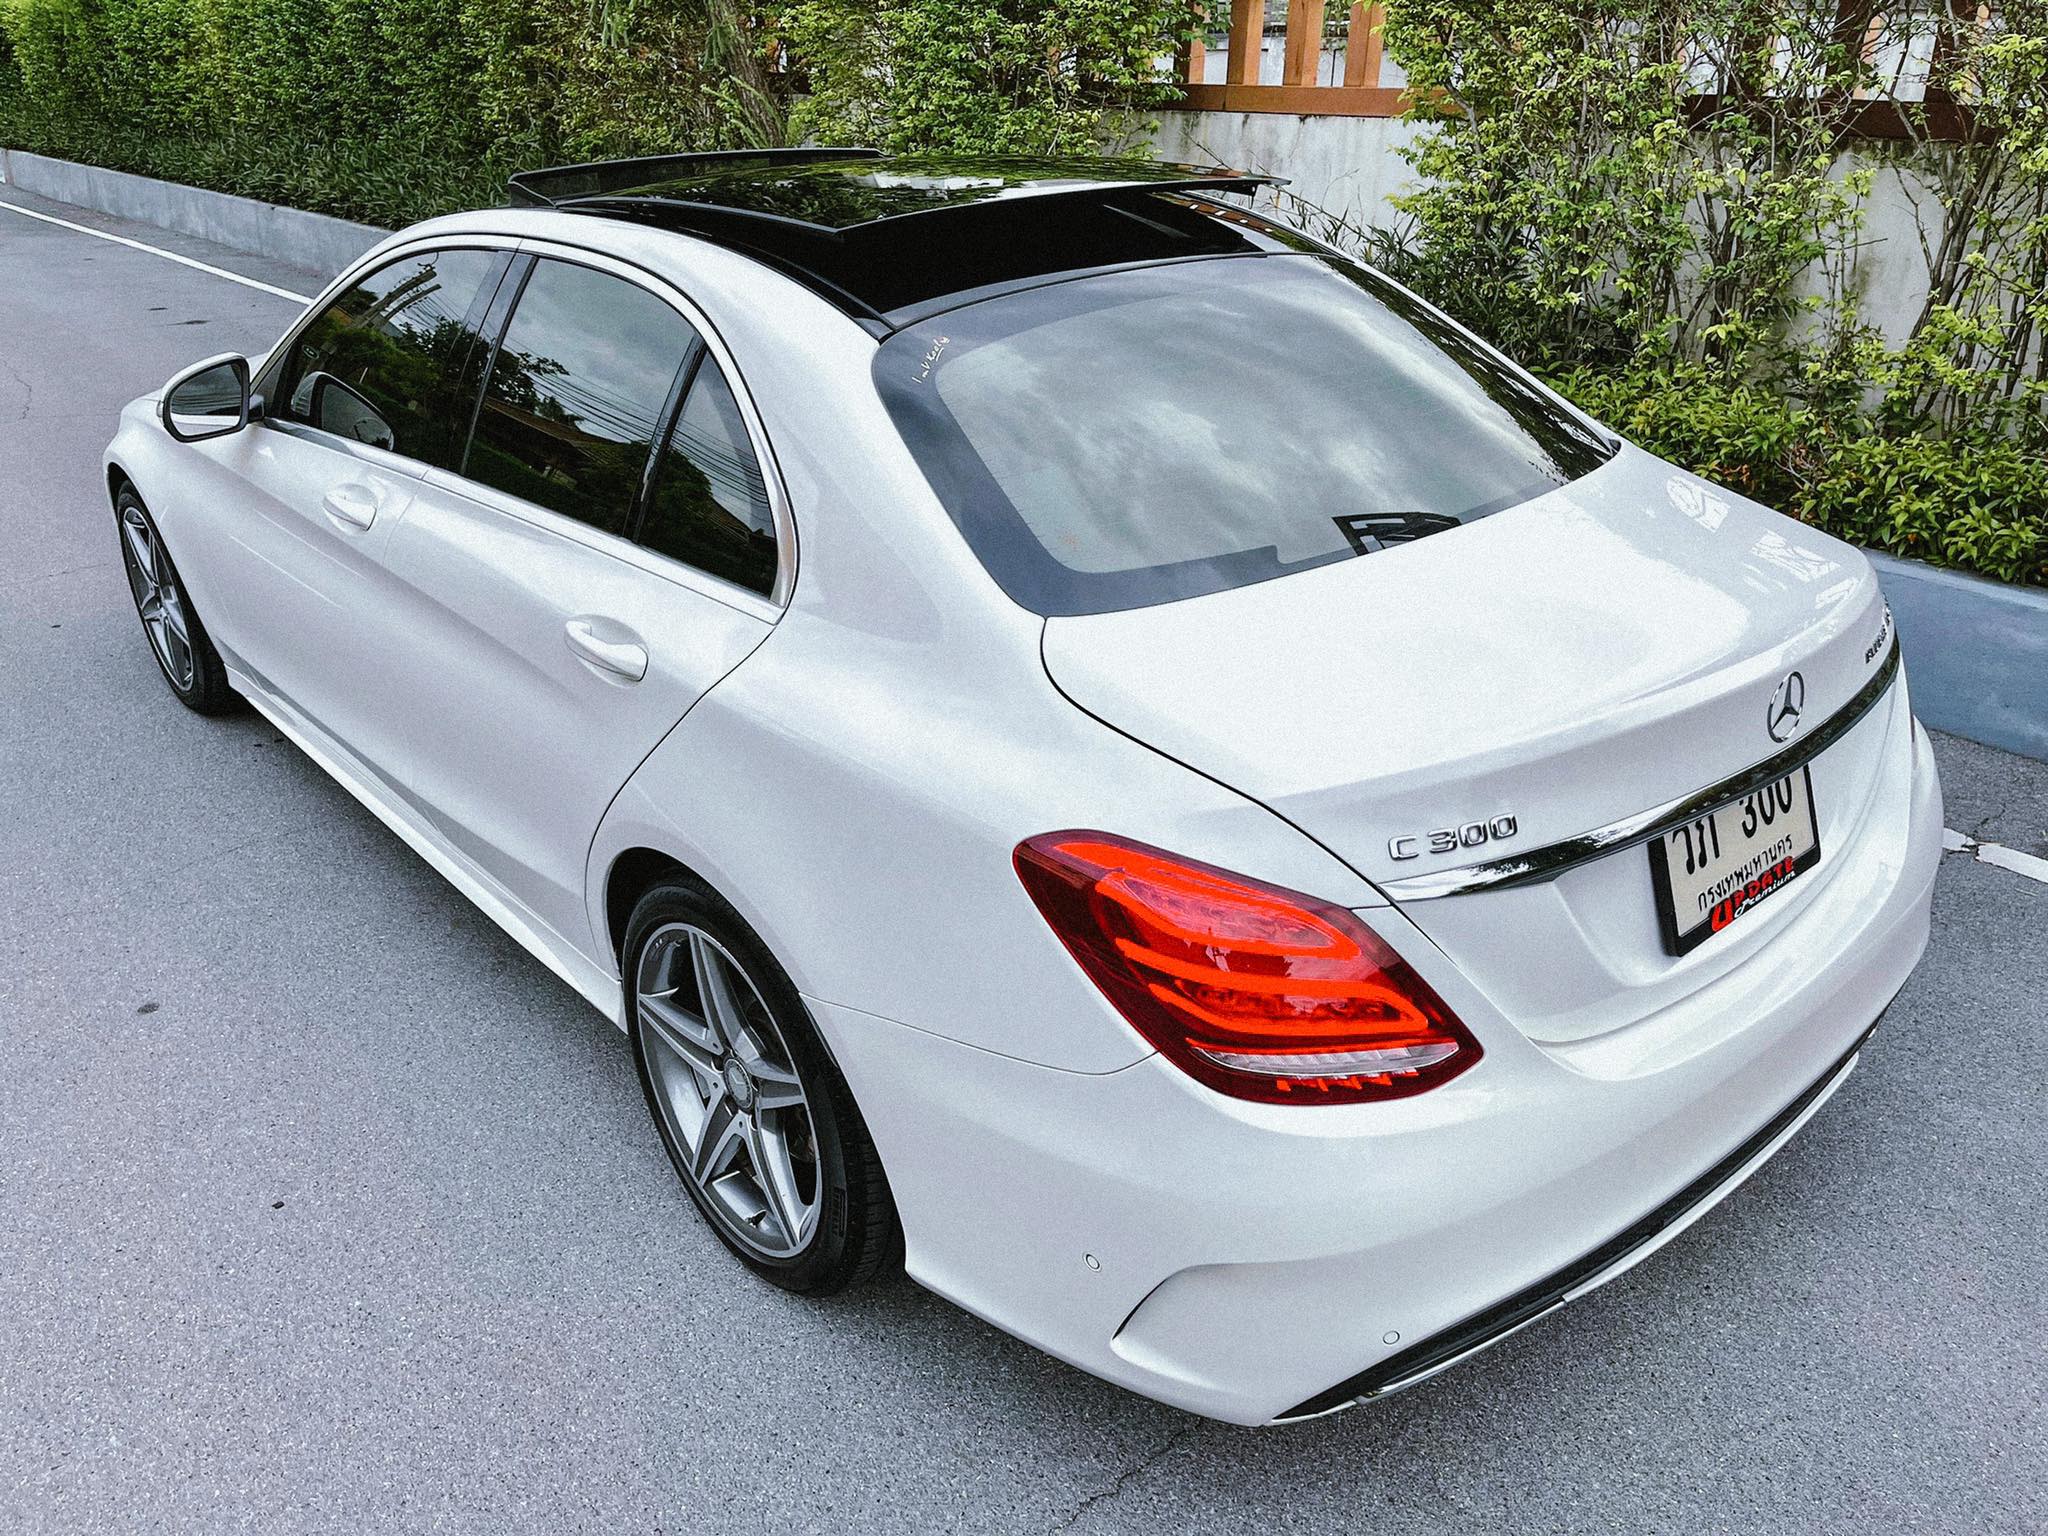 Mercedes Benz C300 AMG BLUETEC Hybrid มือเดียว สวยสะเทือนเลยคันนี้